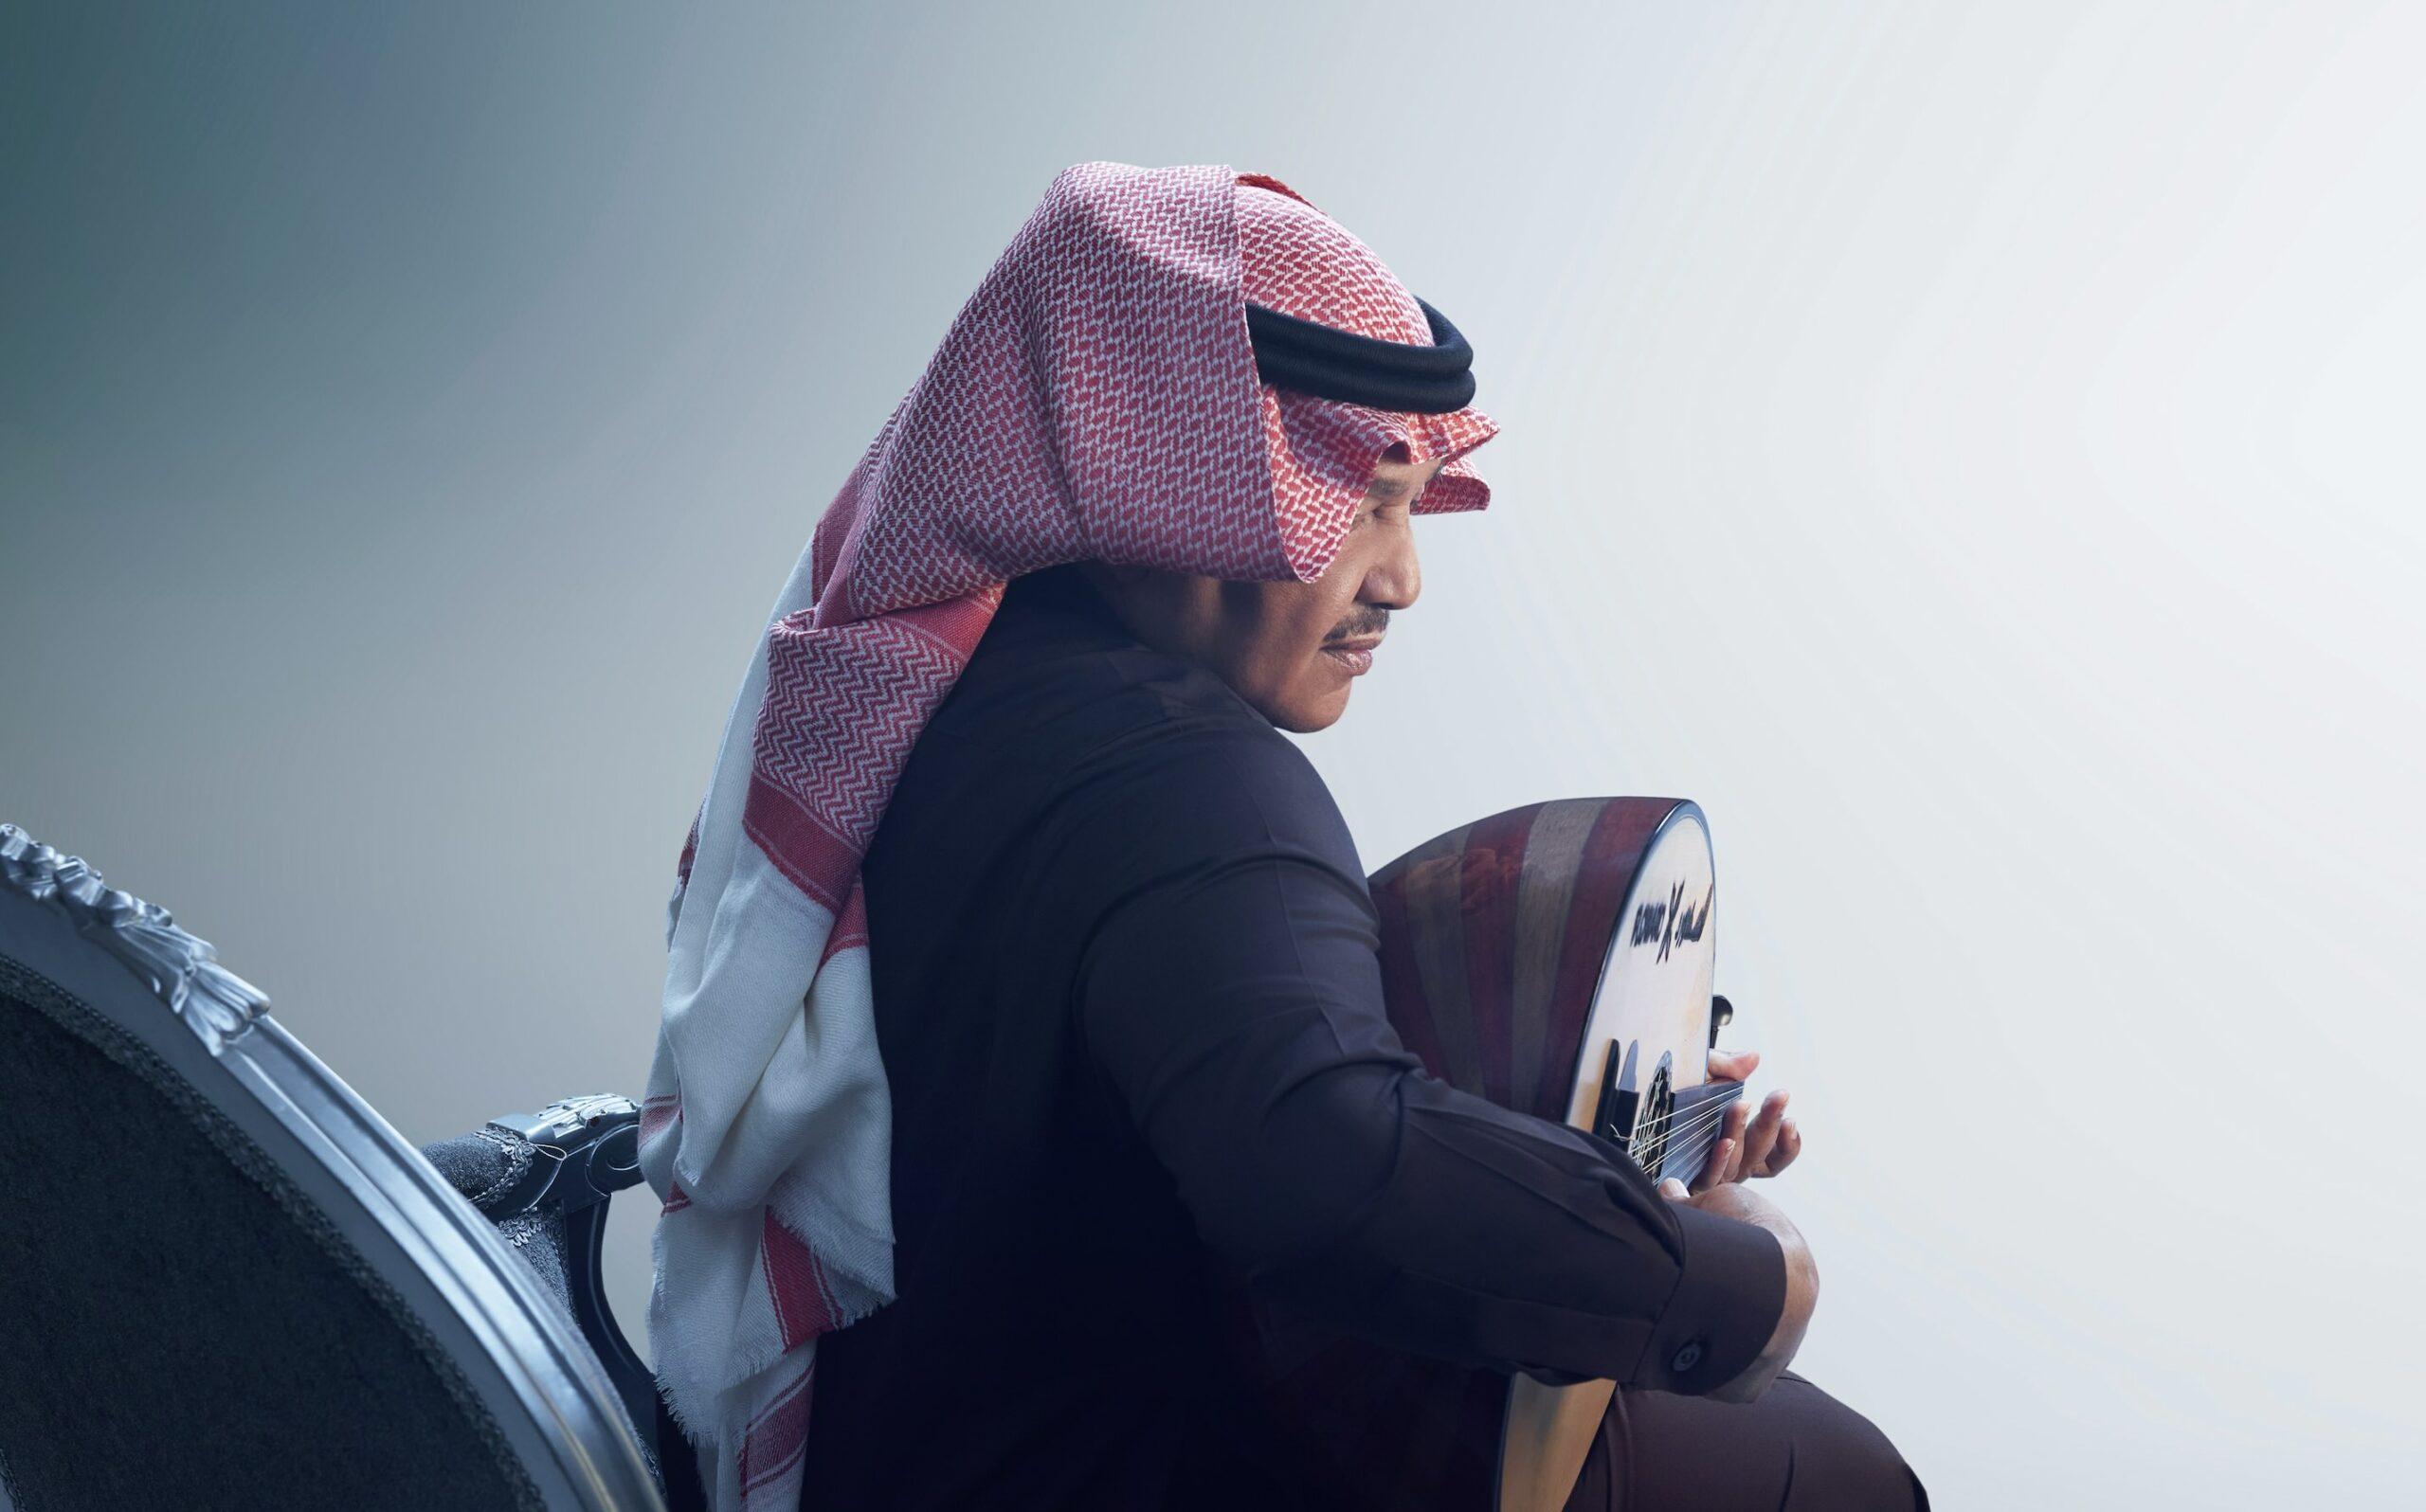 Saudi singer Mohammed Abdo makes his way to Abu Dhabi